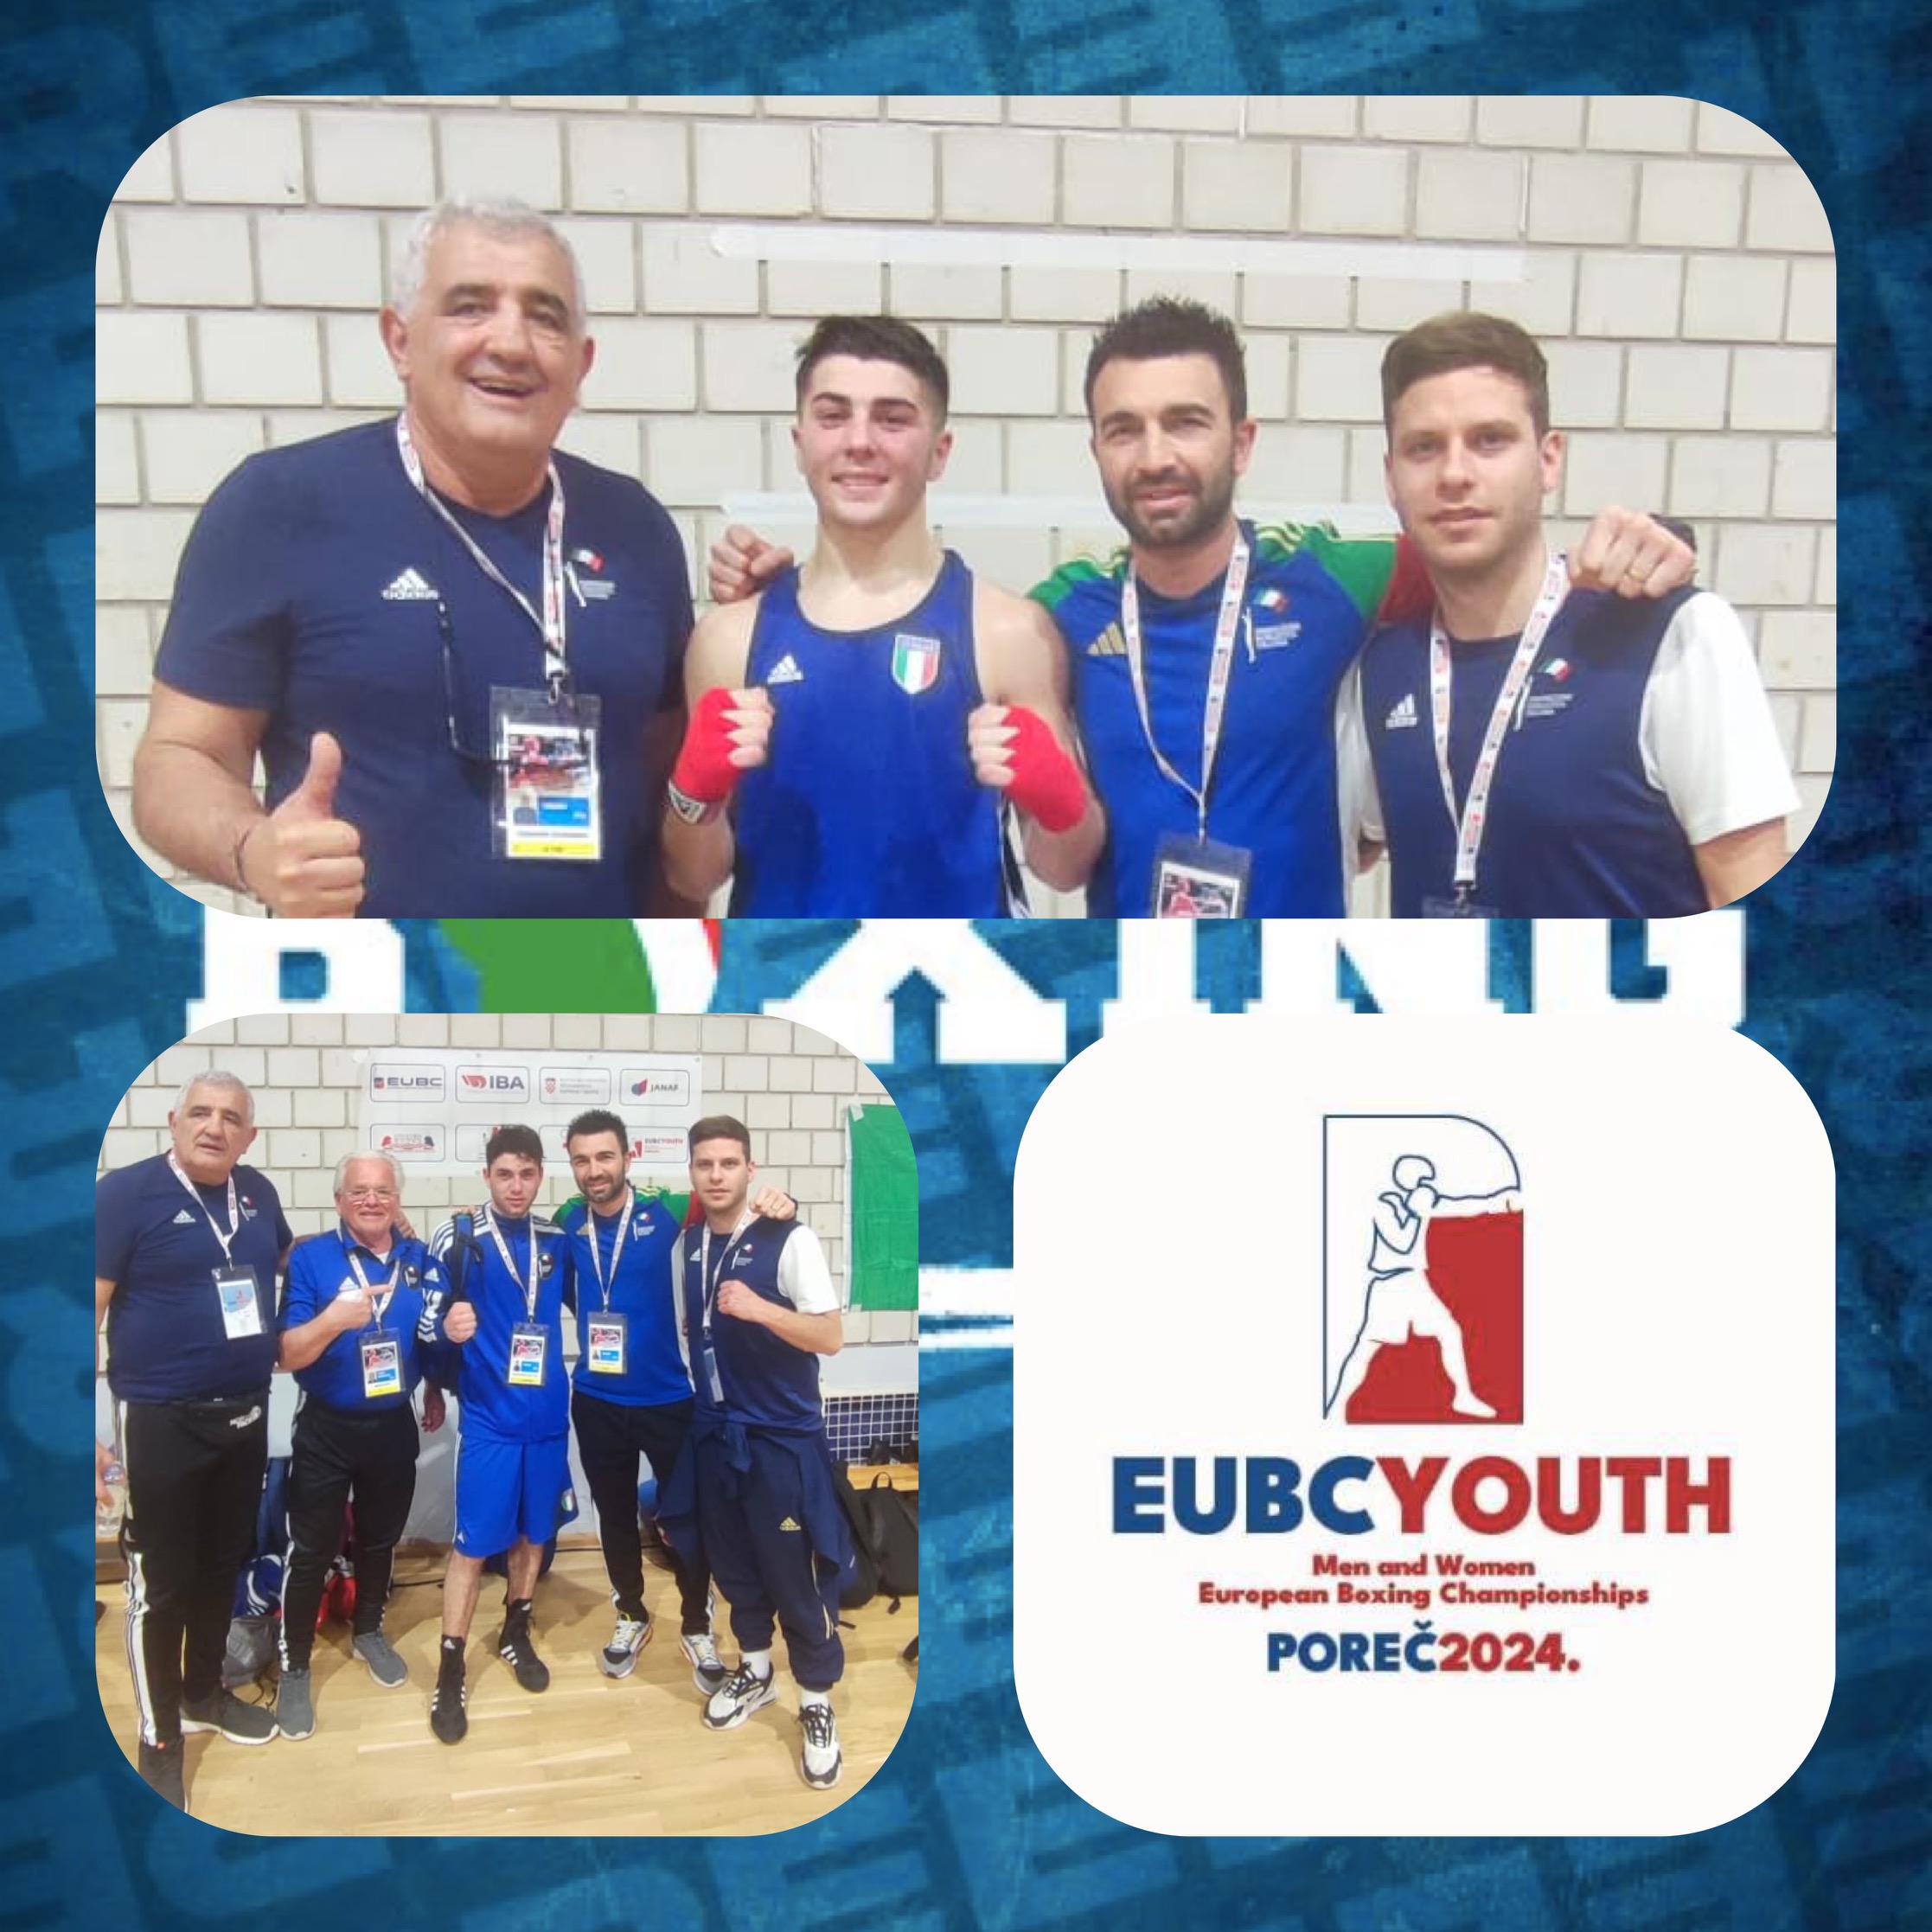 Campionati Europei Youth M/F POREC 2024 - RISULTATI MATCH 1° GIORNATA ITABOXING + PROGRAMMA 2° 